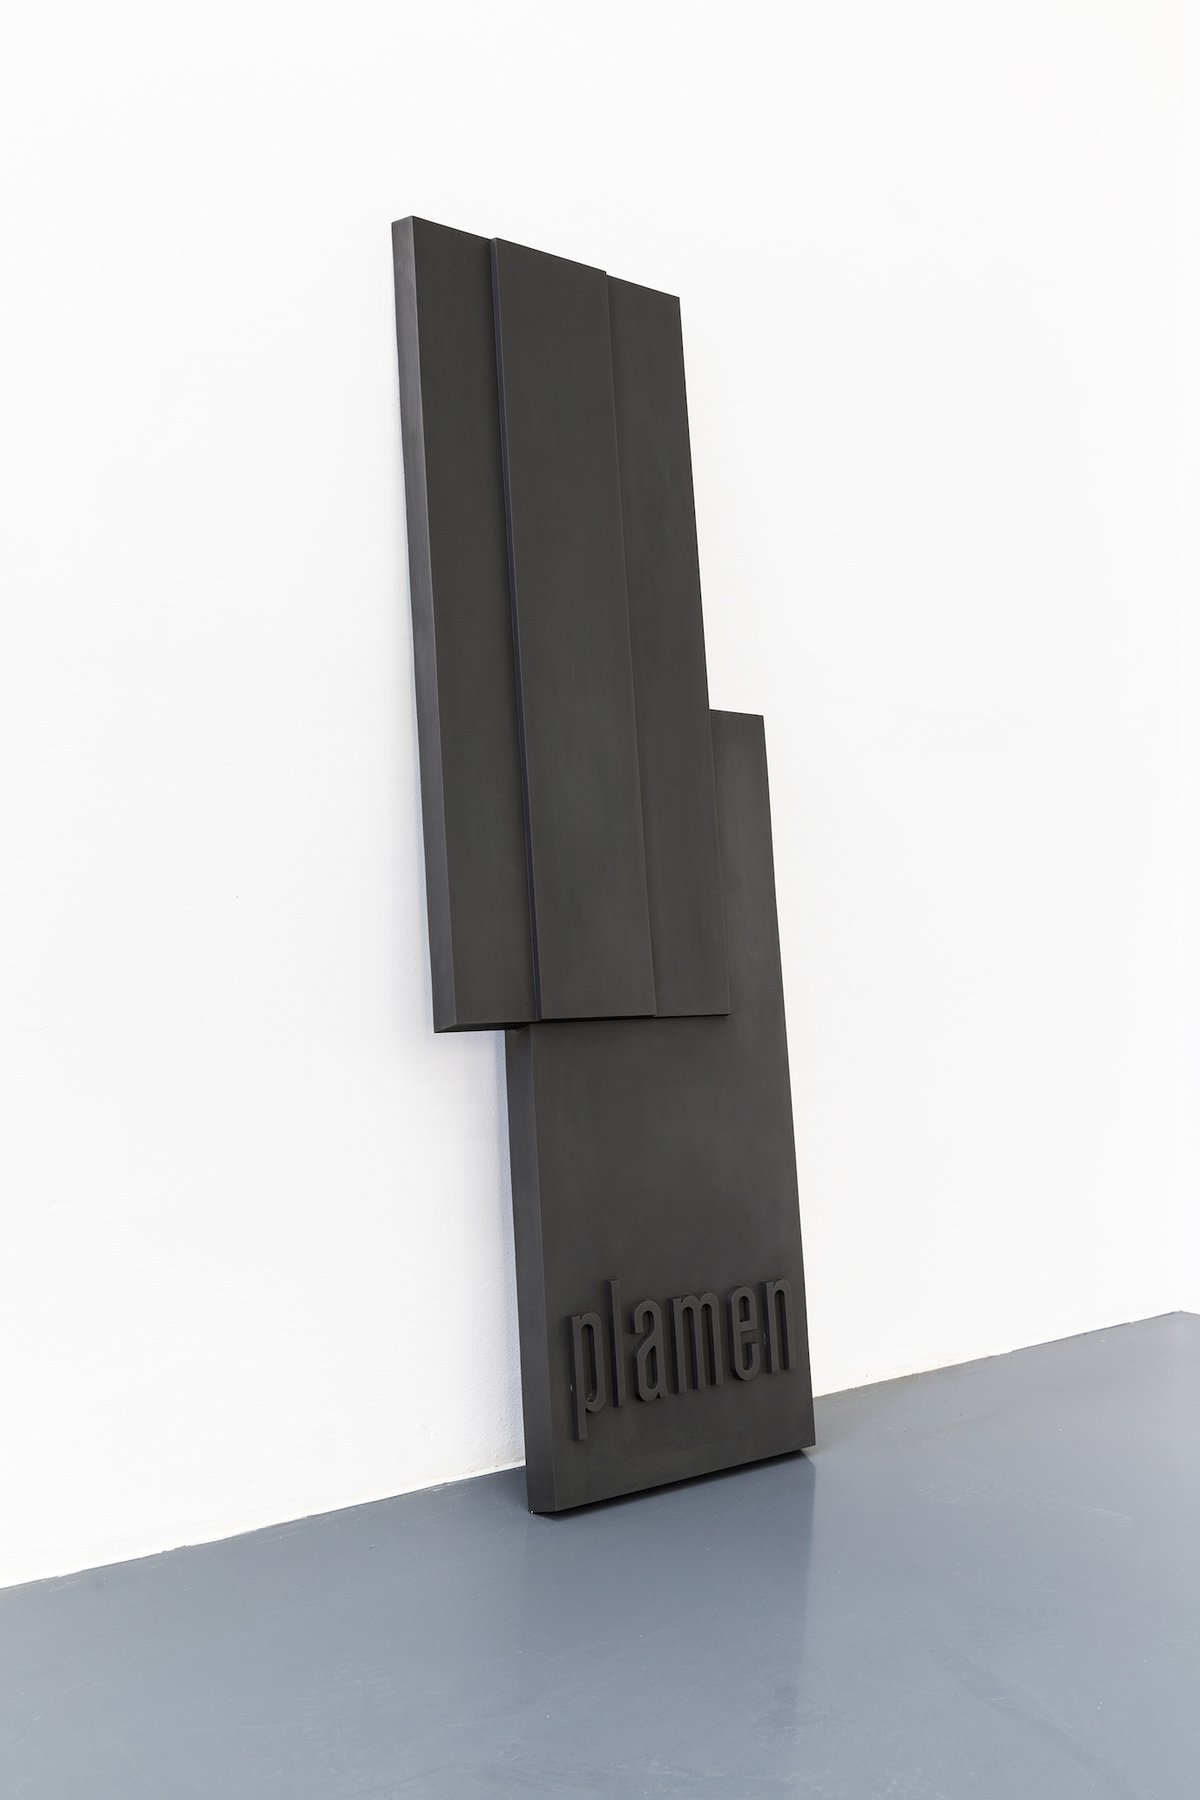 Plamen DejanoffUntitled, 2015Bronze162 x 55 x 7 cm